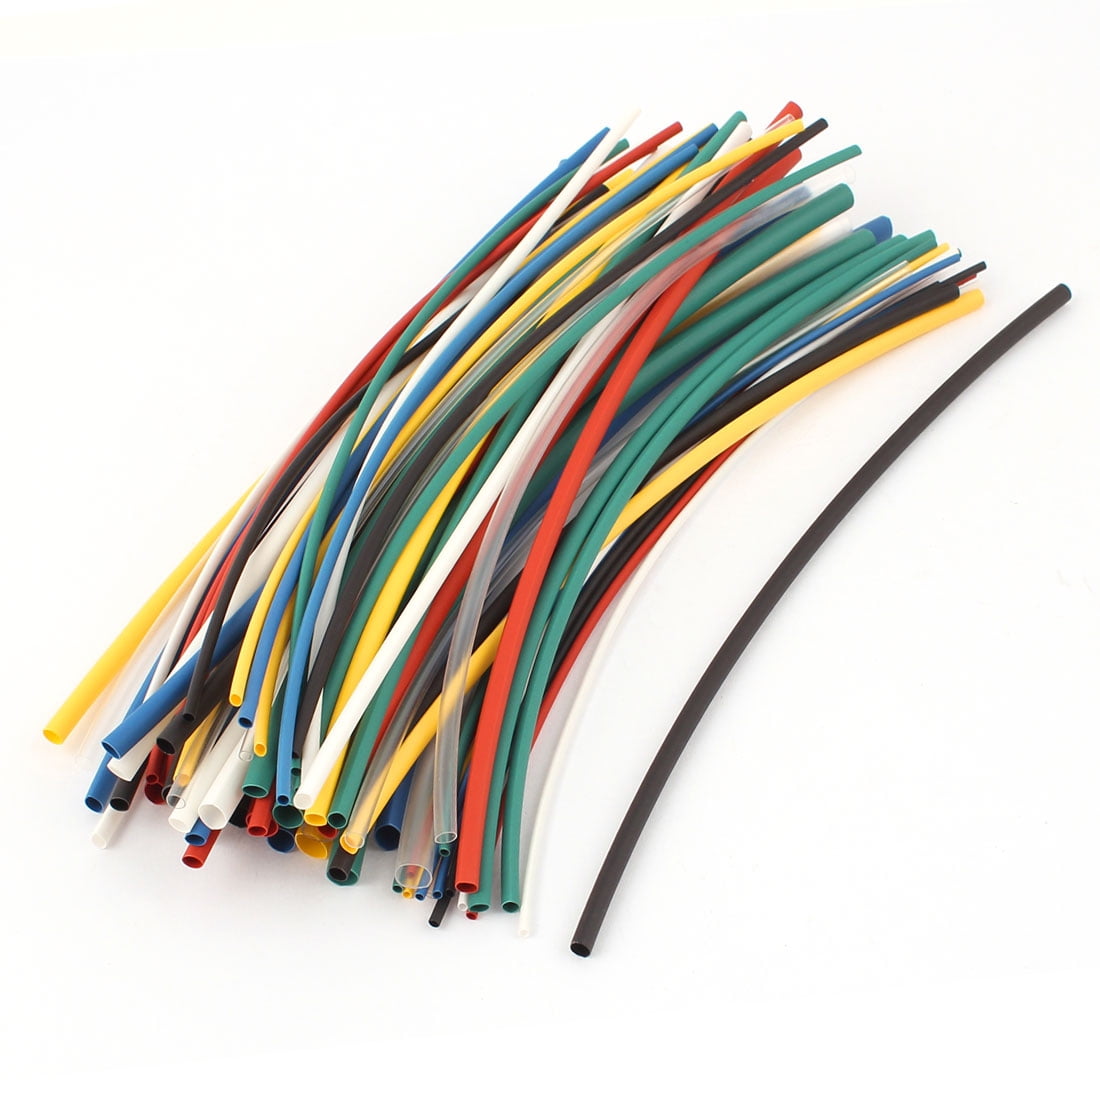 Heat Shrink Tubes Wire Wrap 625pcs Heat Shrink Tubing Kit Ratio 2:1 Electrical